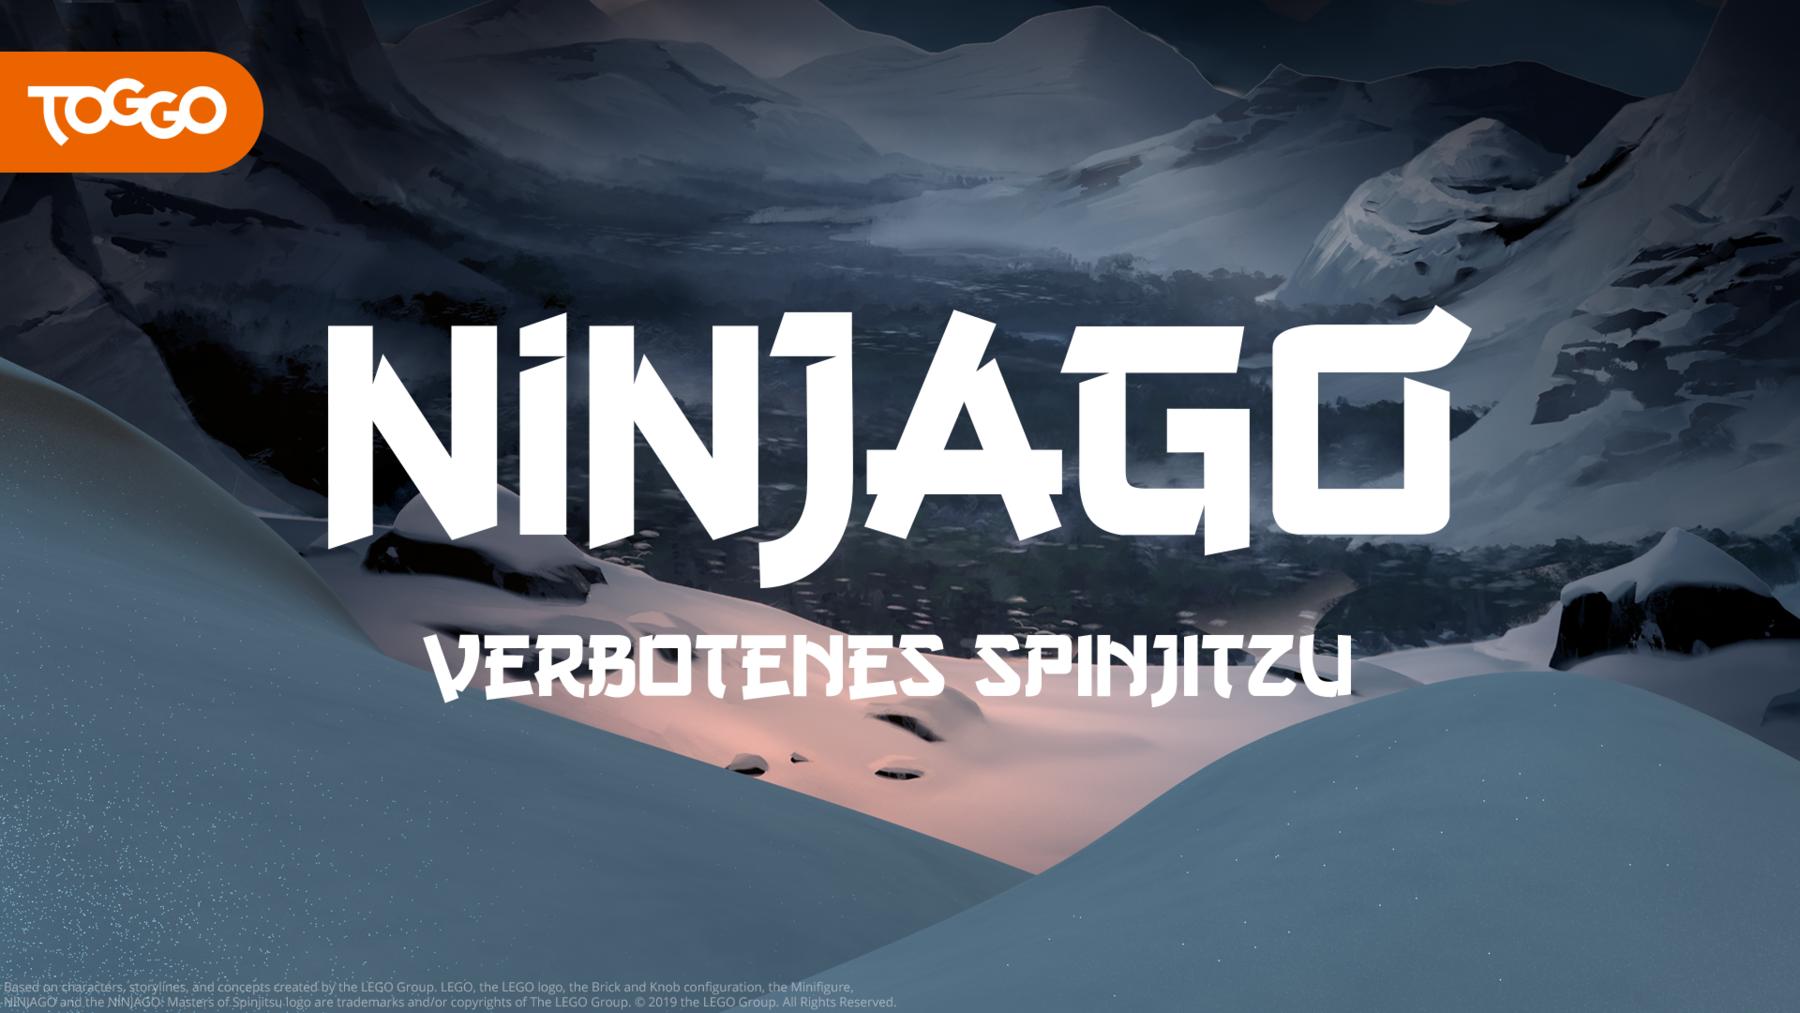 Ninjago - Verbotenes Spinjitzu